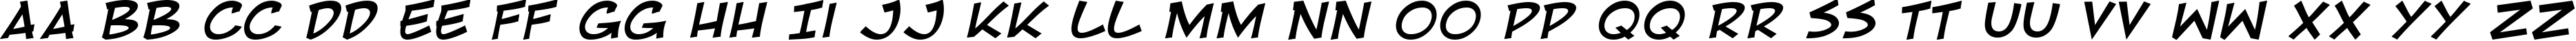 Пример написания английского алфавита шрифтом RivenShield  Italic